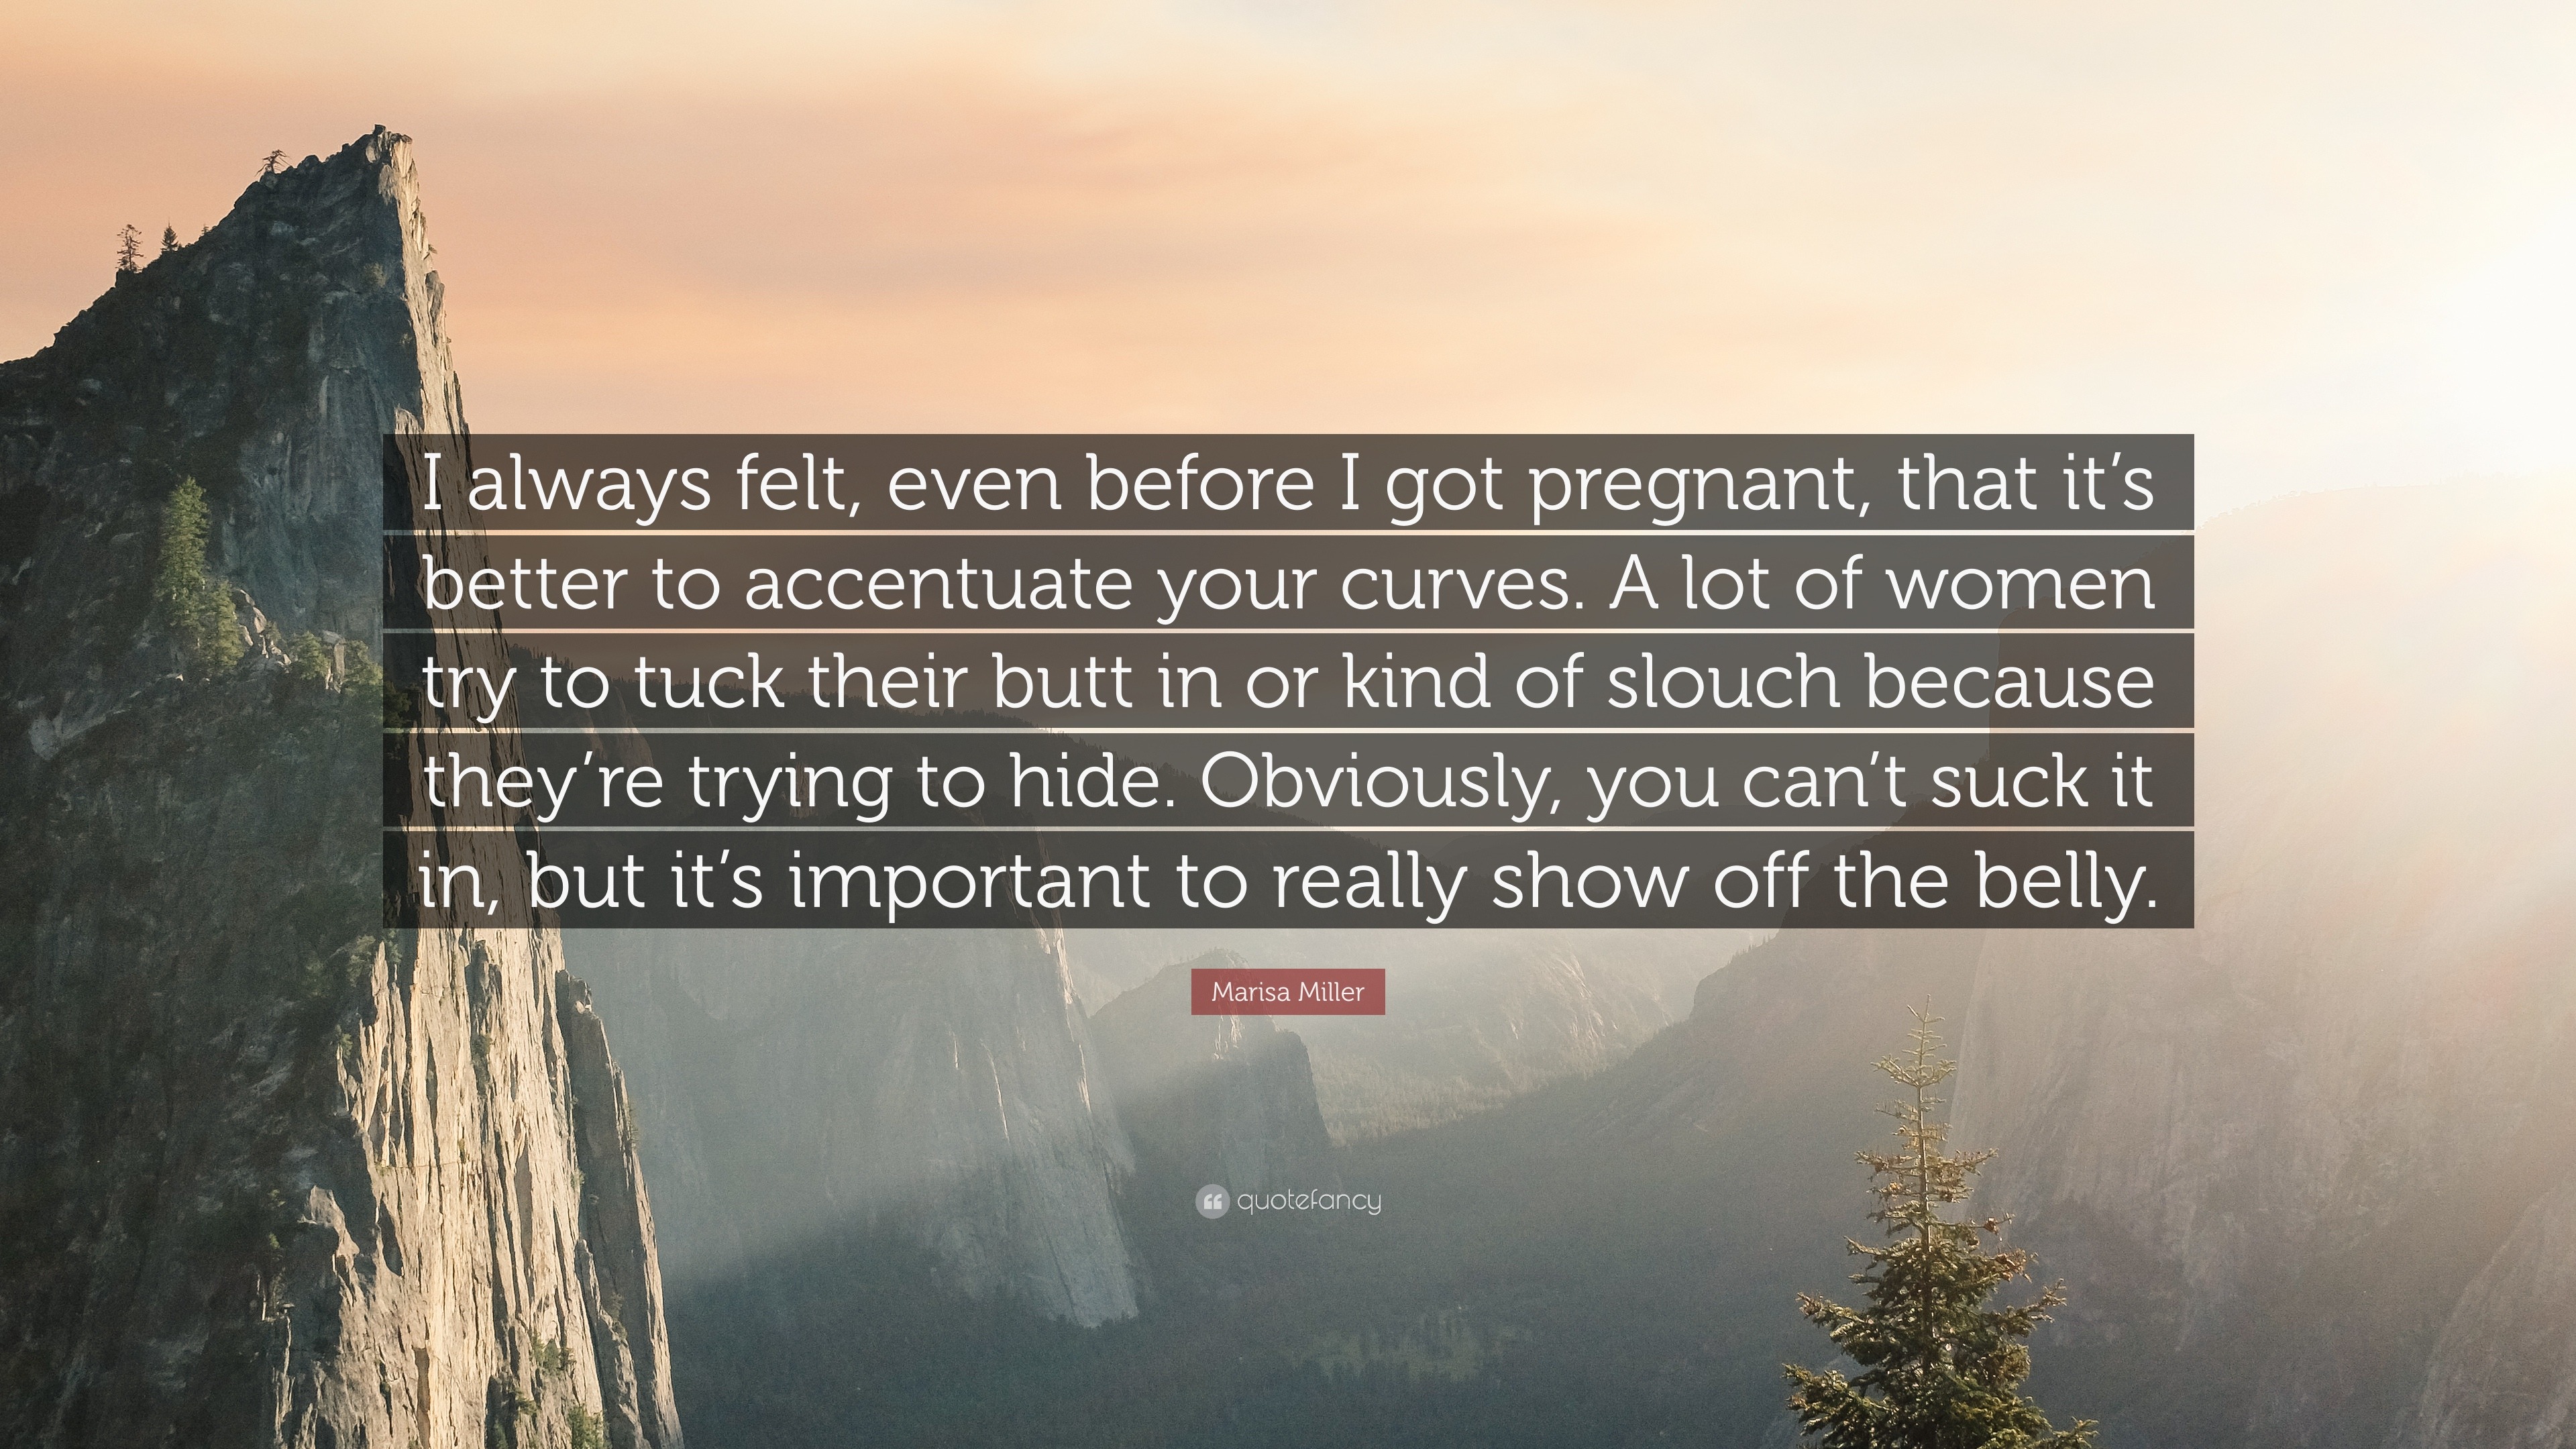 Marisa Miller Quote: “I always felt, even before I got pregnant, that ...